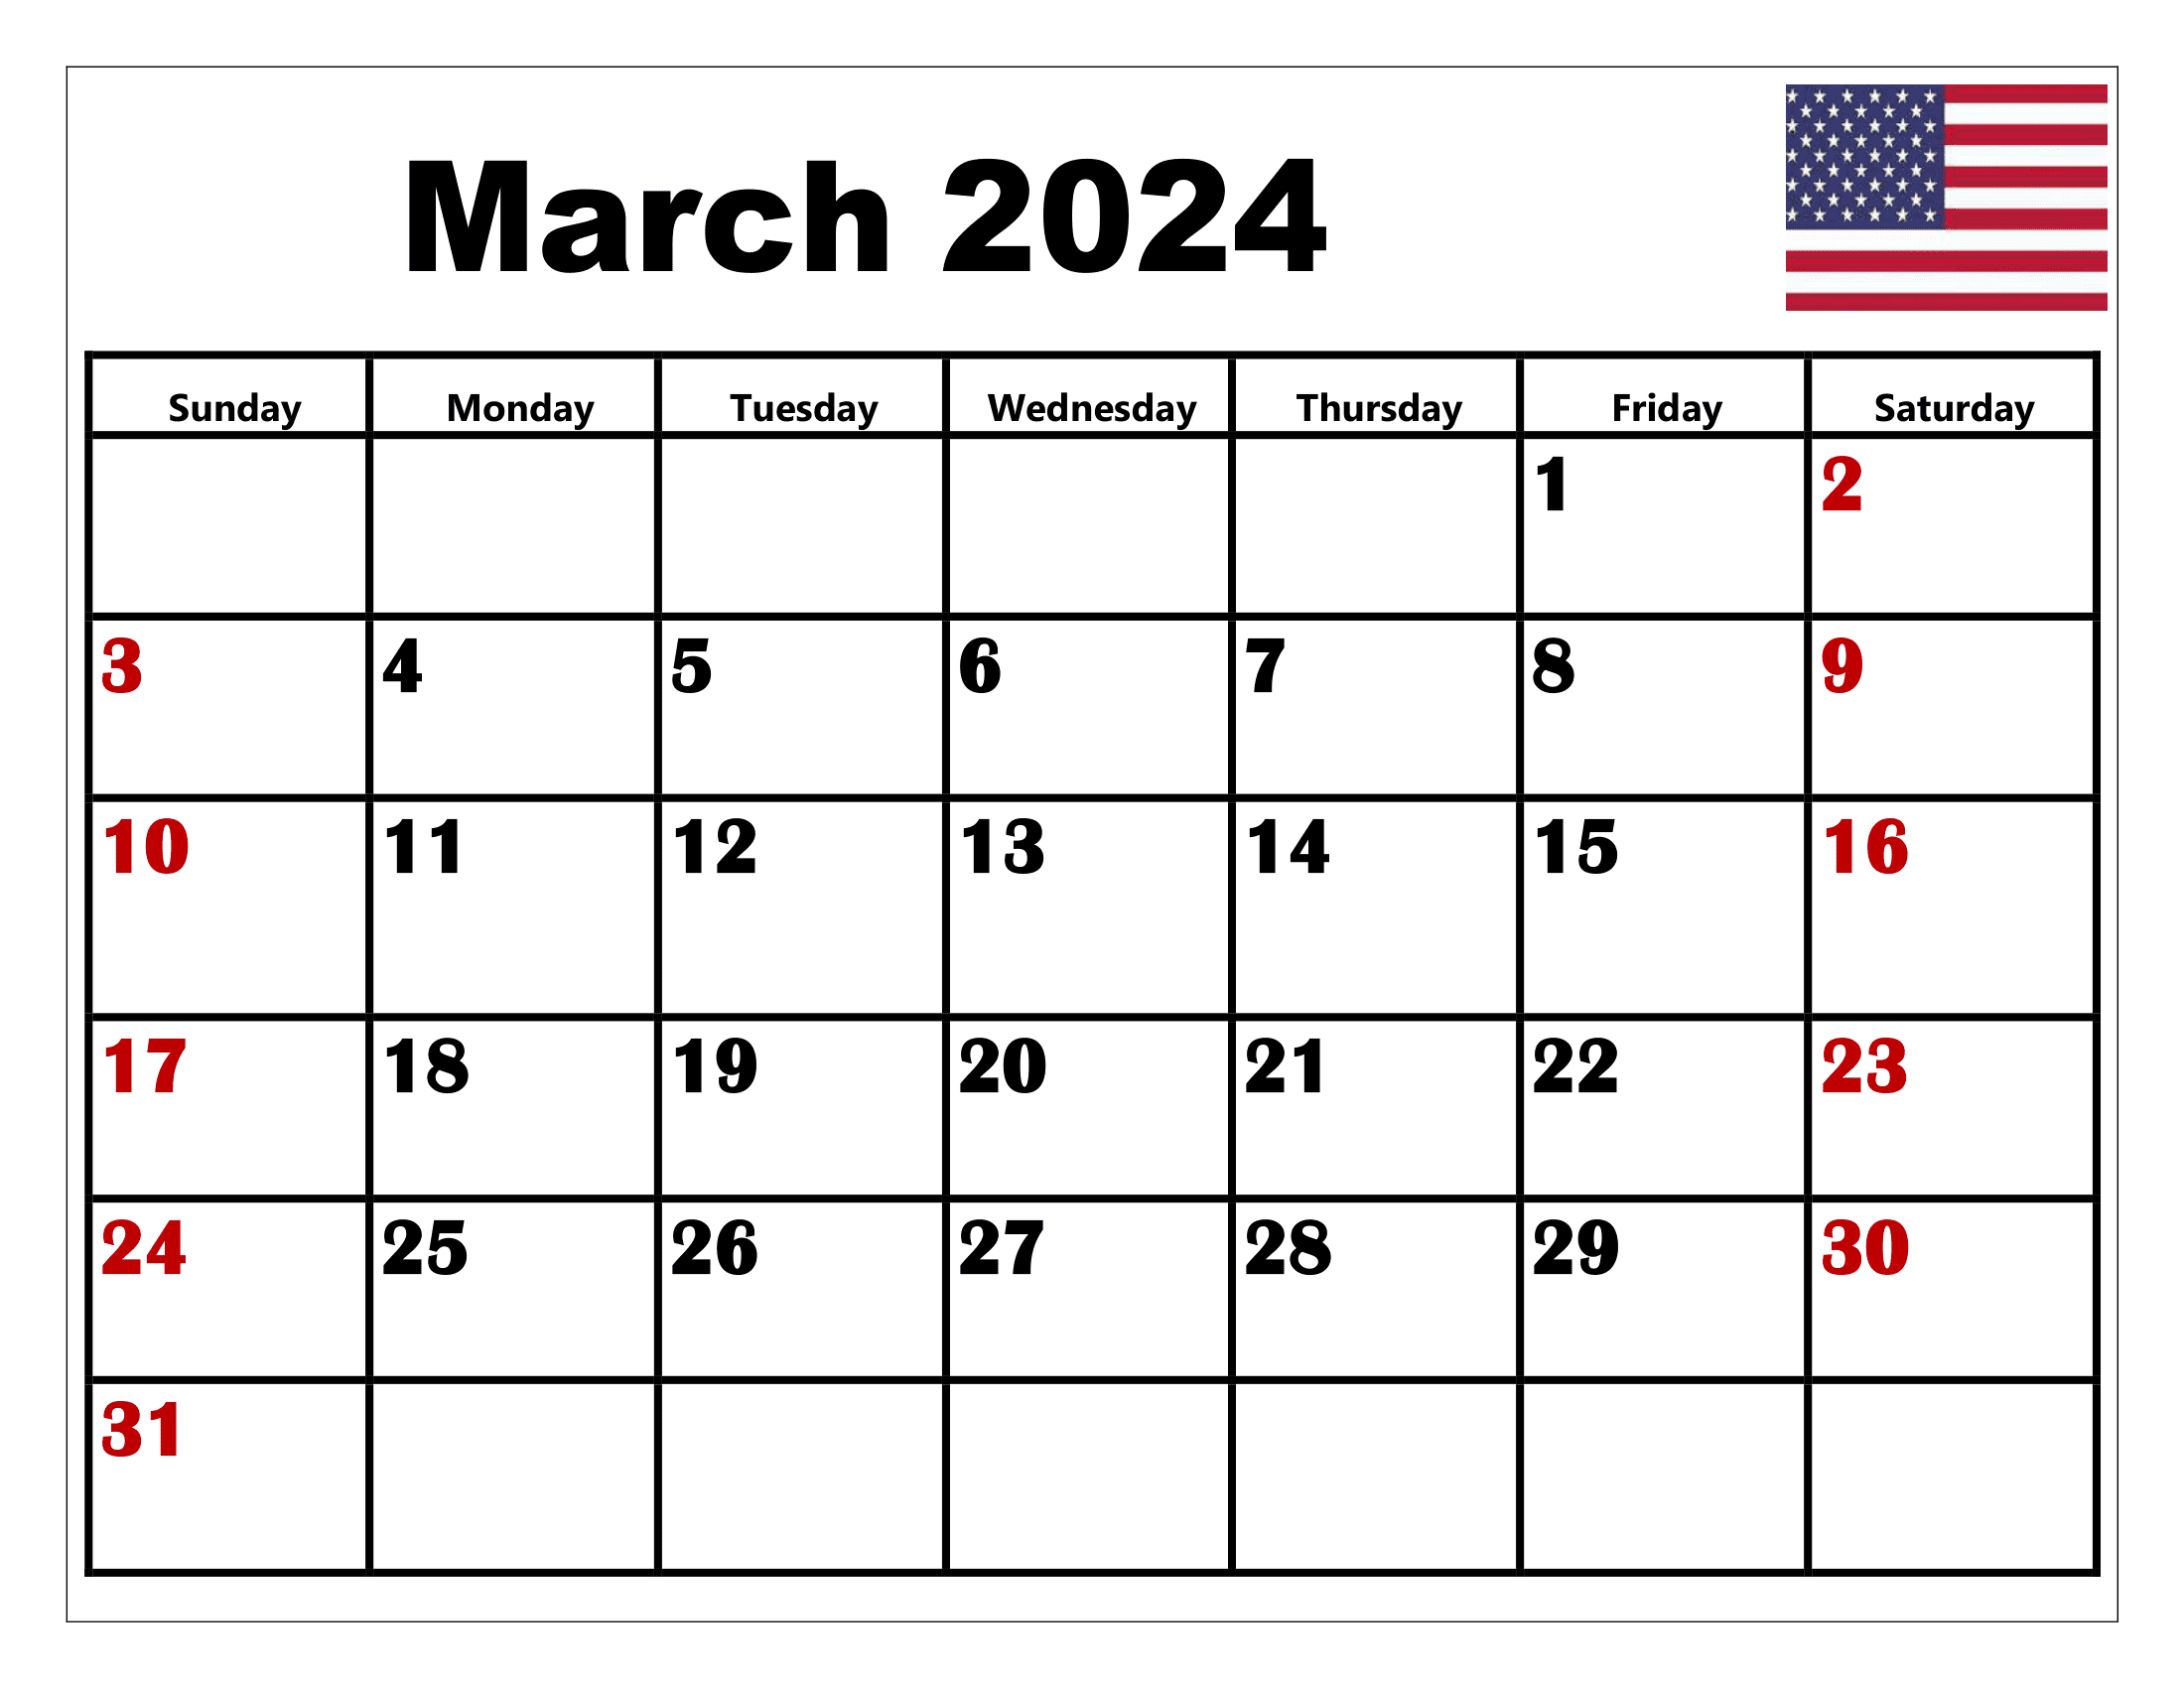 March 2024 Calendar Printable Pdf With Holidays Template Free for Free Printable March 2024 Calendar With Holidays